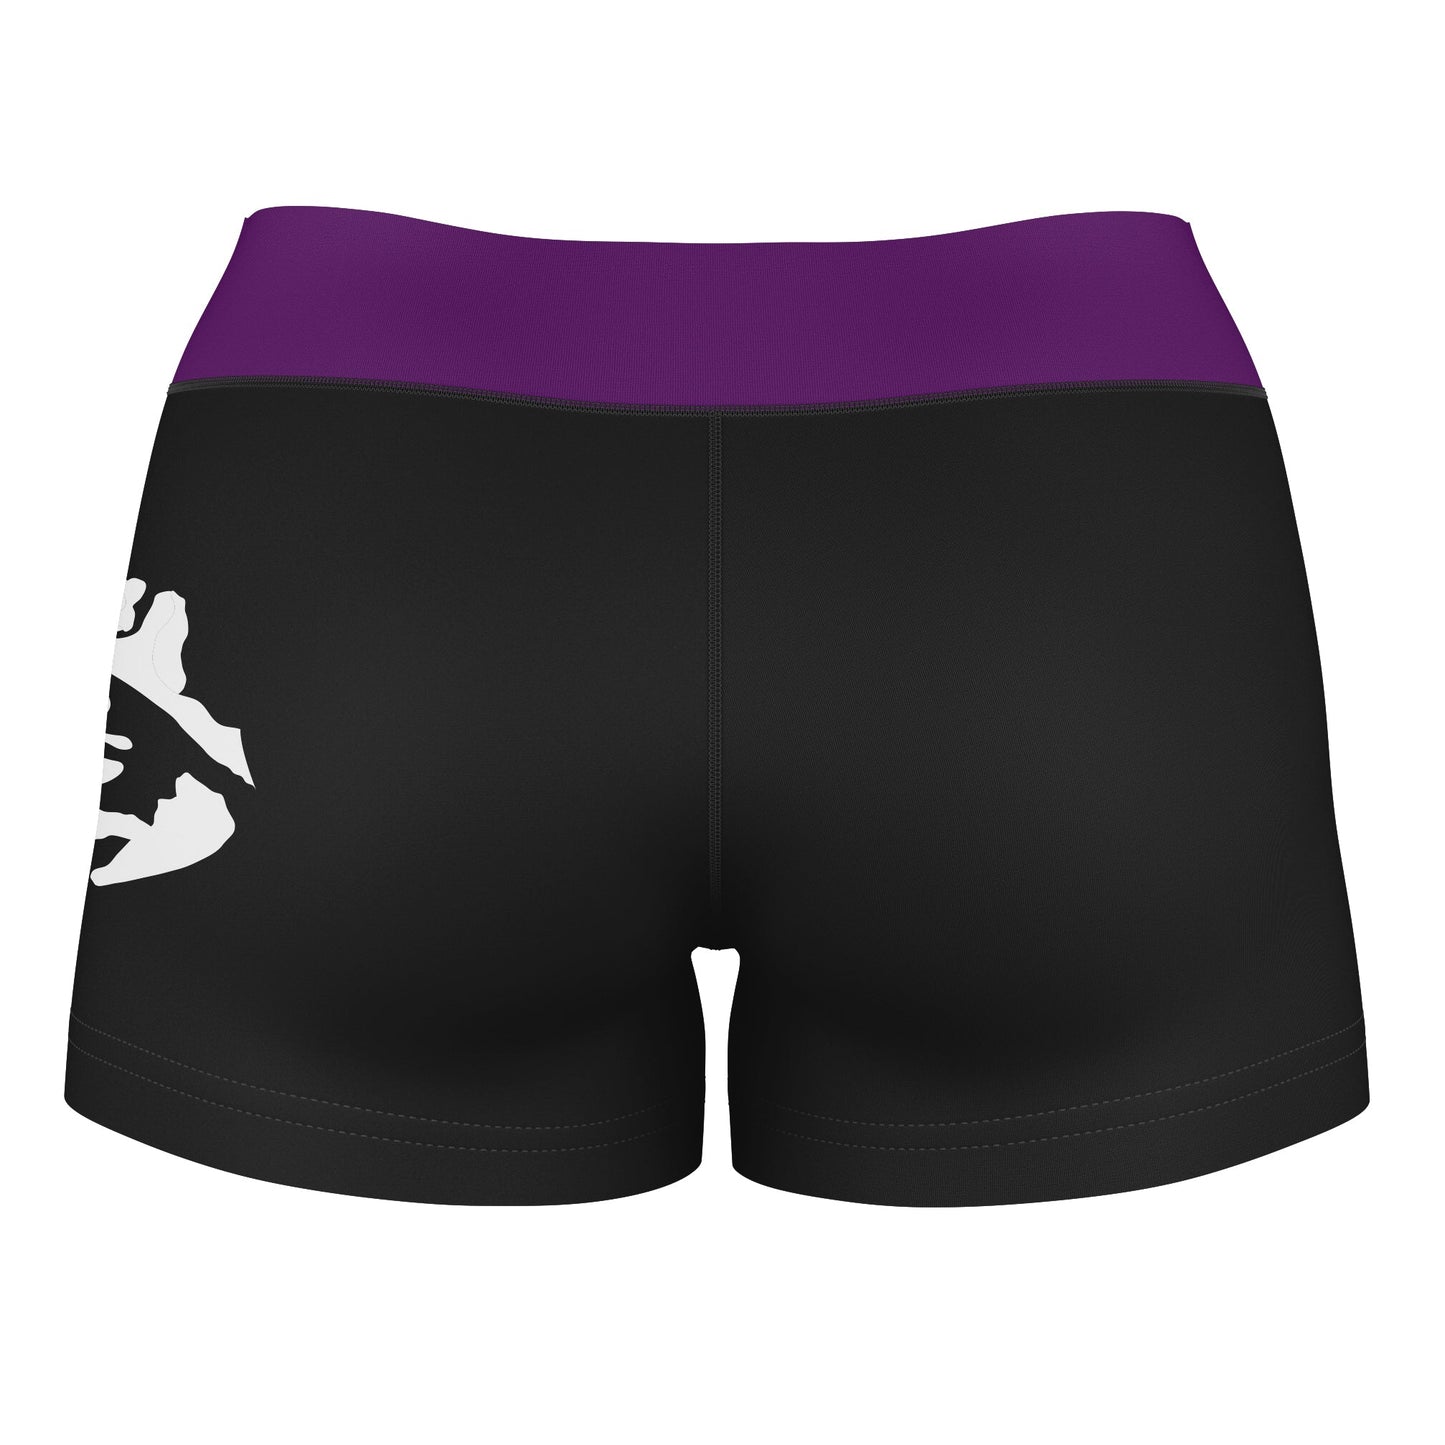 LSU Tigers Vive La Fete Game Day Logo on Thigh and Waistband Black & Purple Women Yoga Booty Workout Shorts 3.75 Inseam - Vive La F̻te - Online Apparel Store